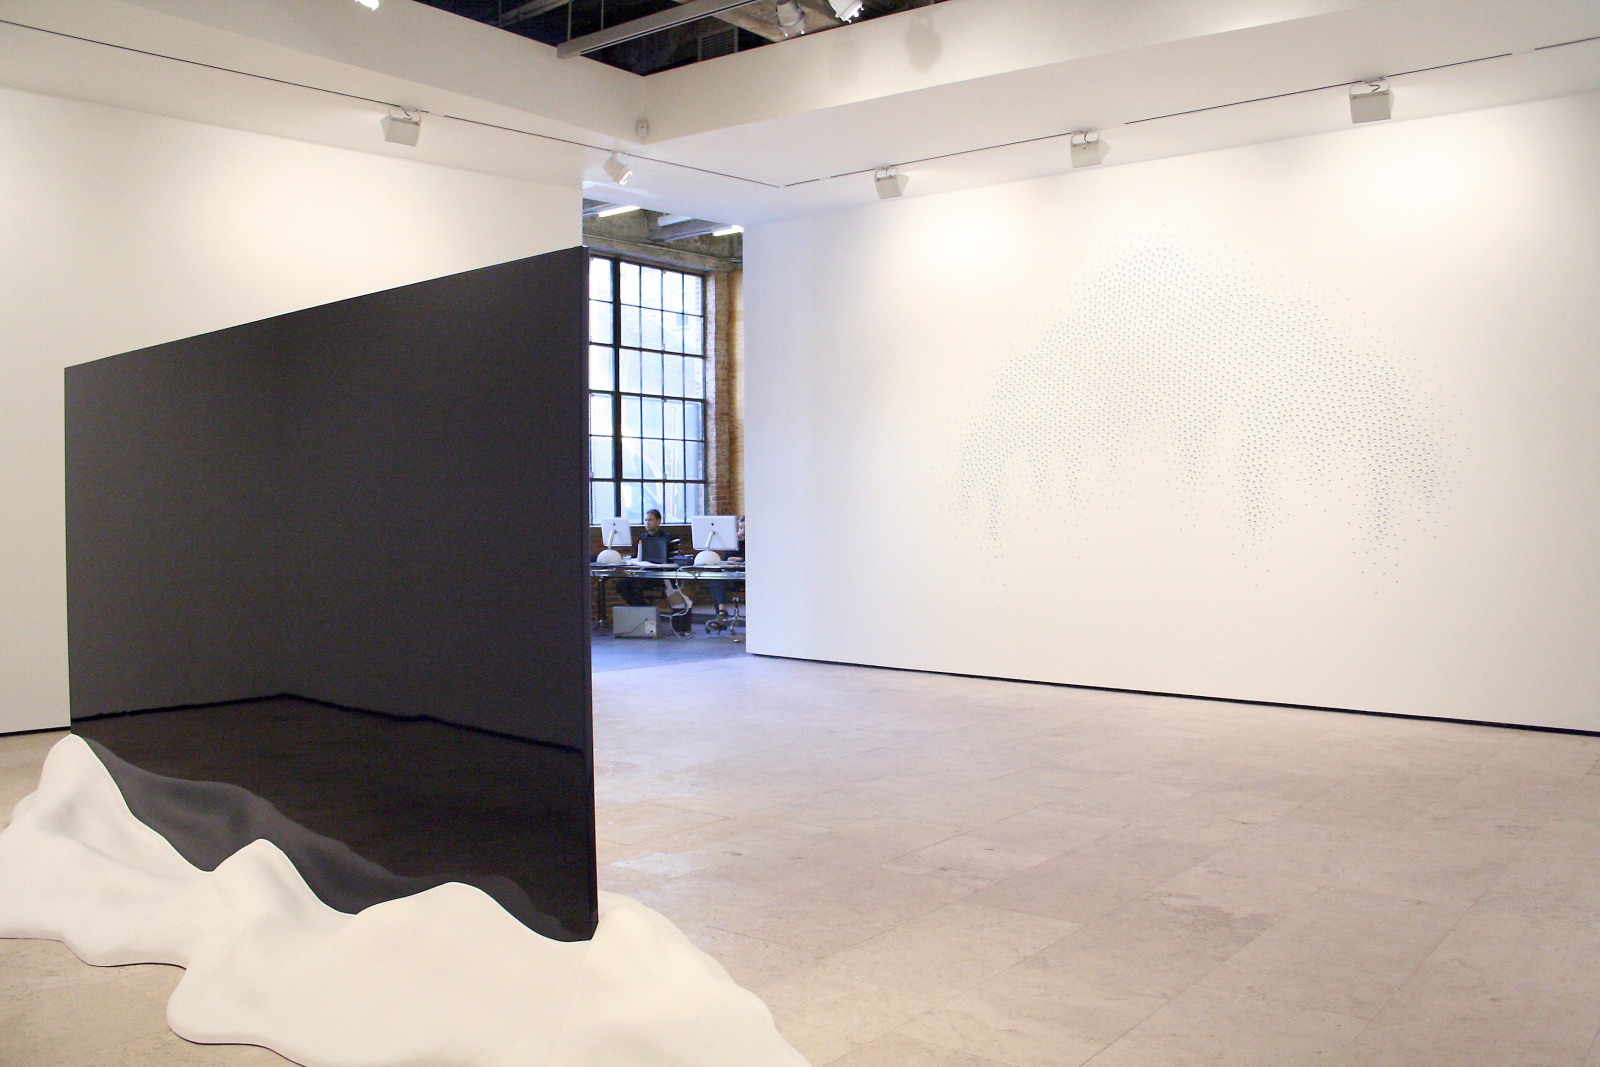 View 3 of TERESITA FERNANDEZ Installation at Lehmann Maupin Gallery.